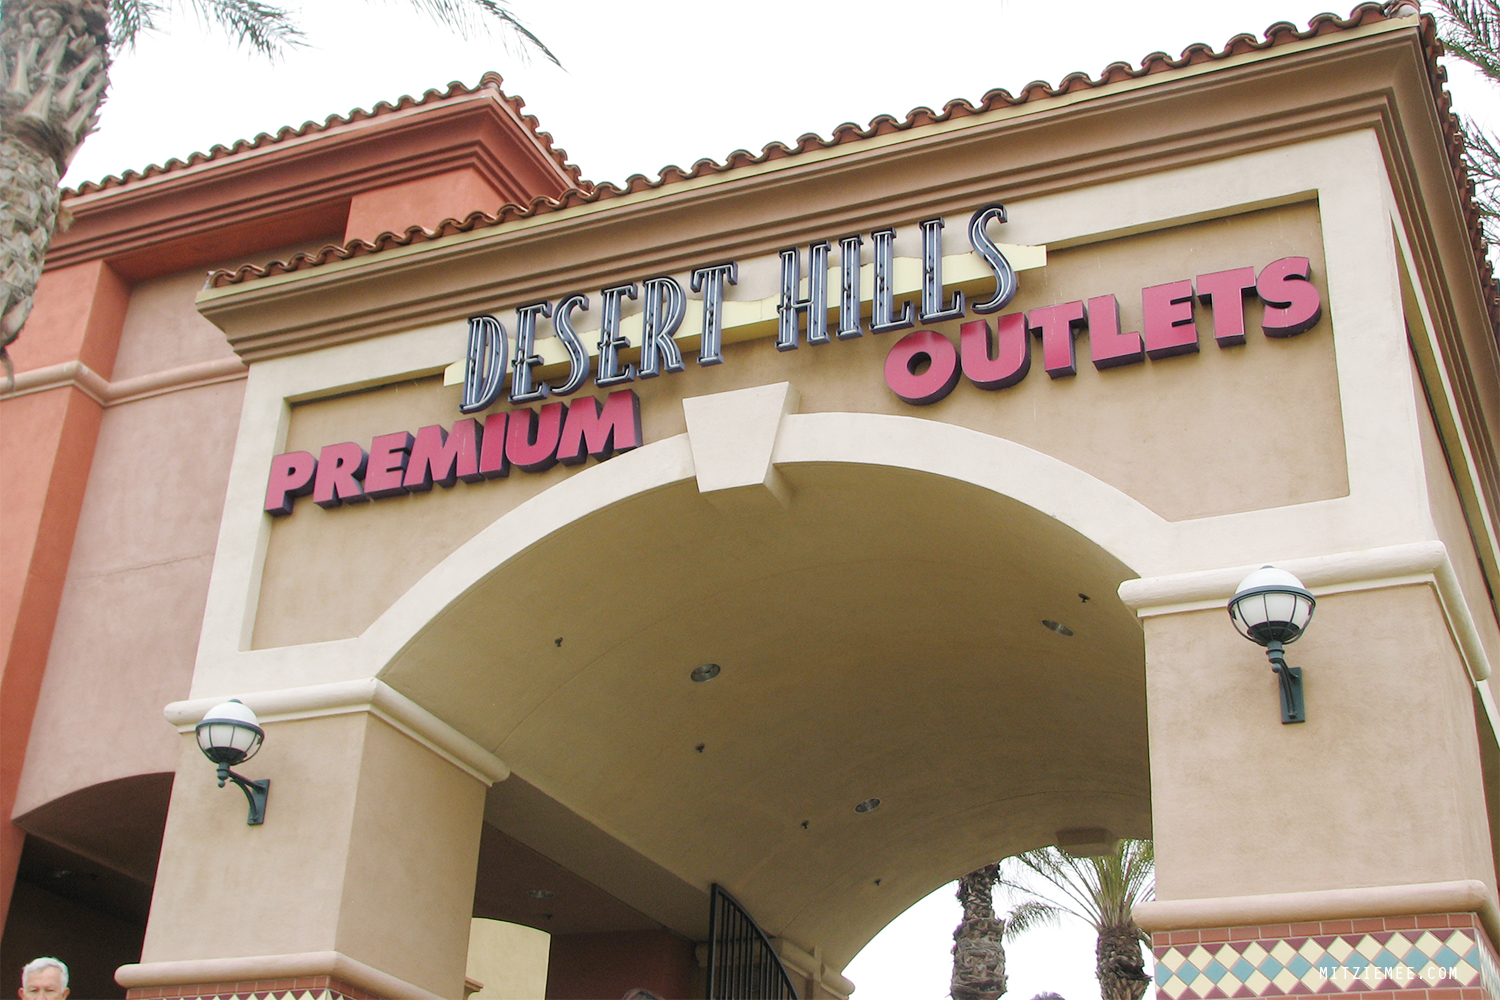 Desert Hills Premium  Outlets